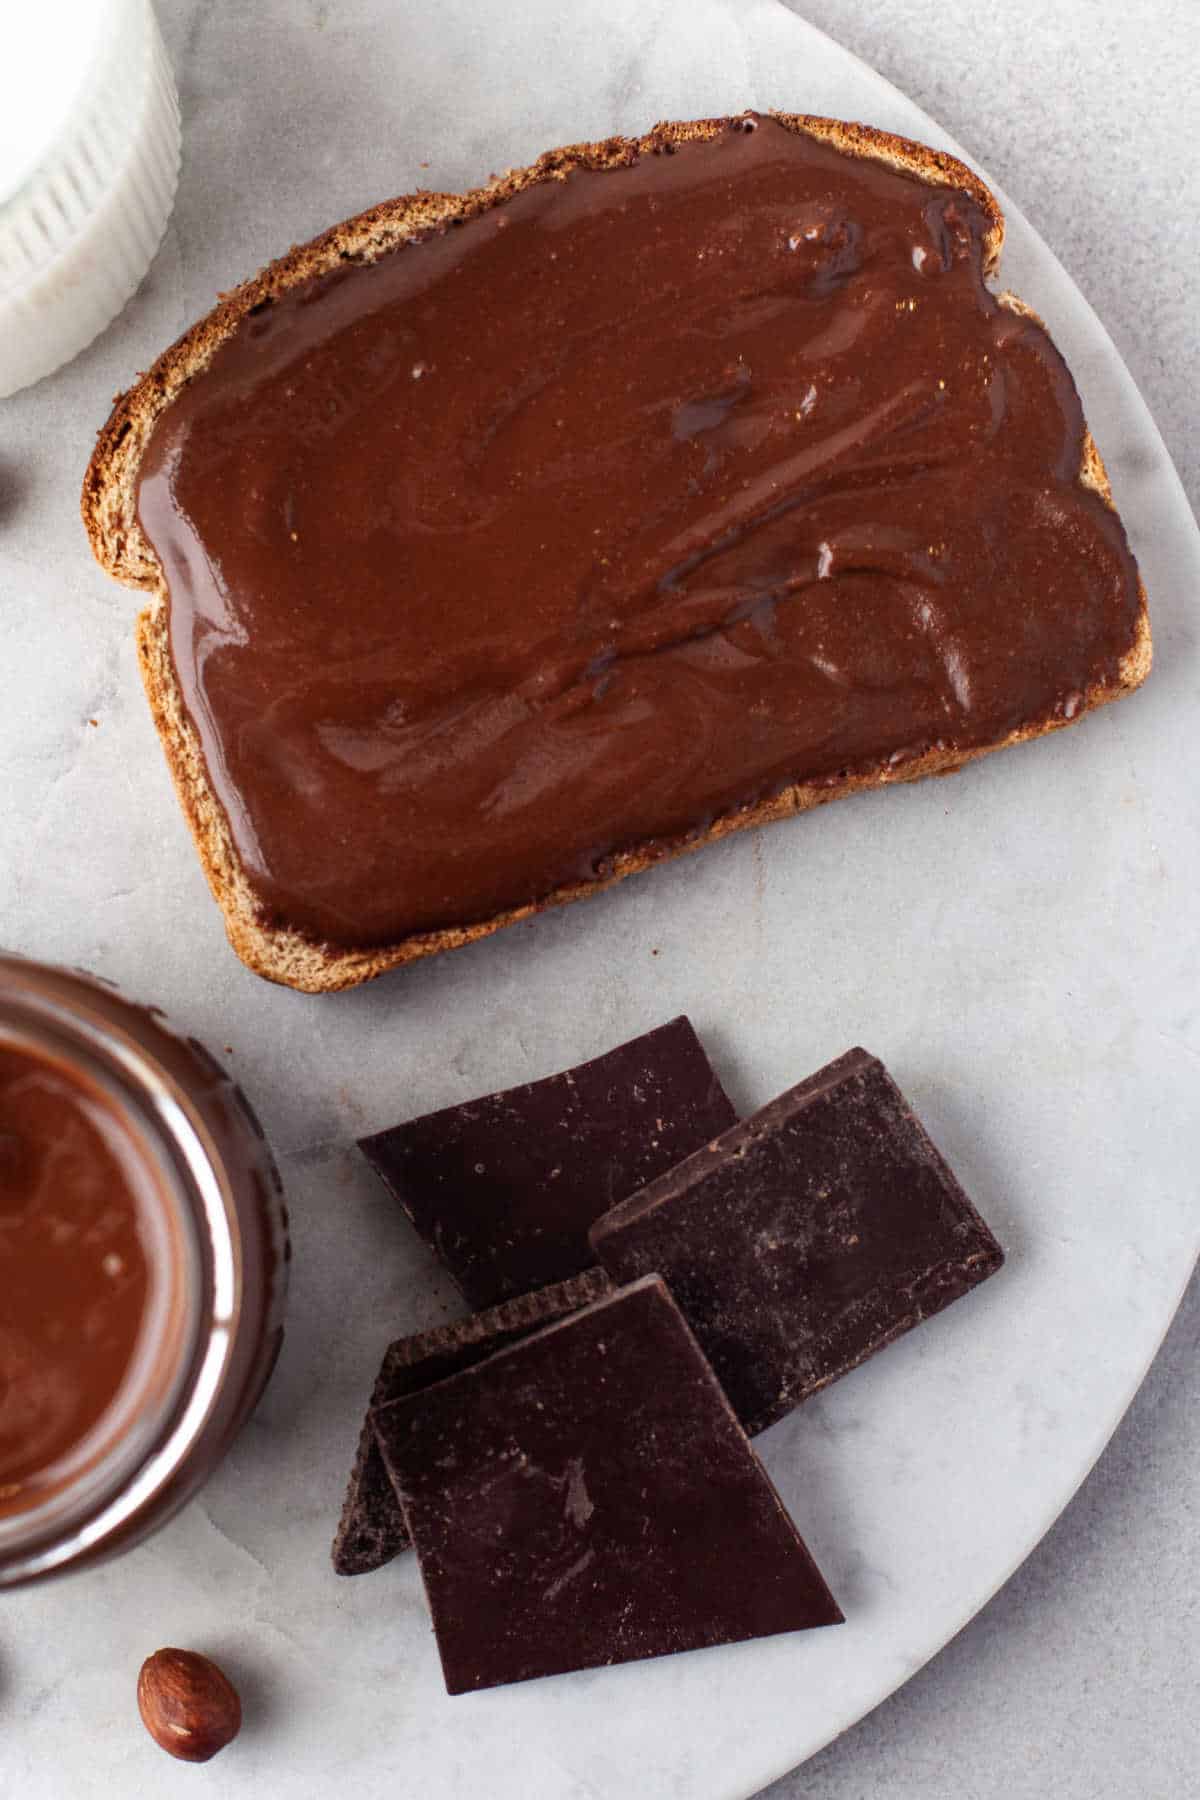 Nutella spread on a piece of toast.